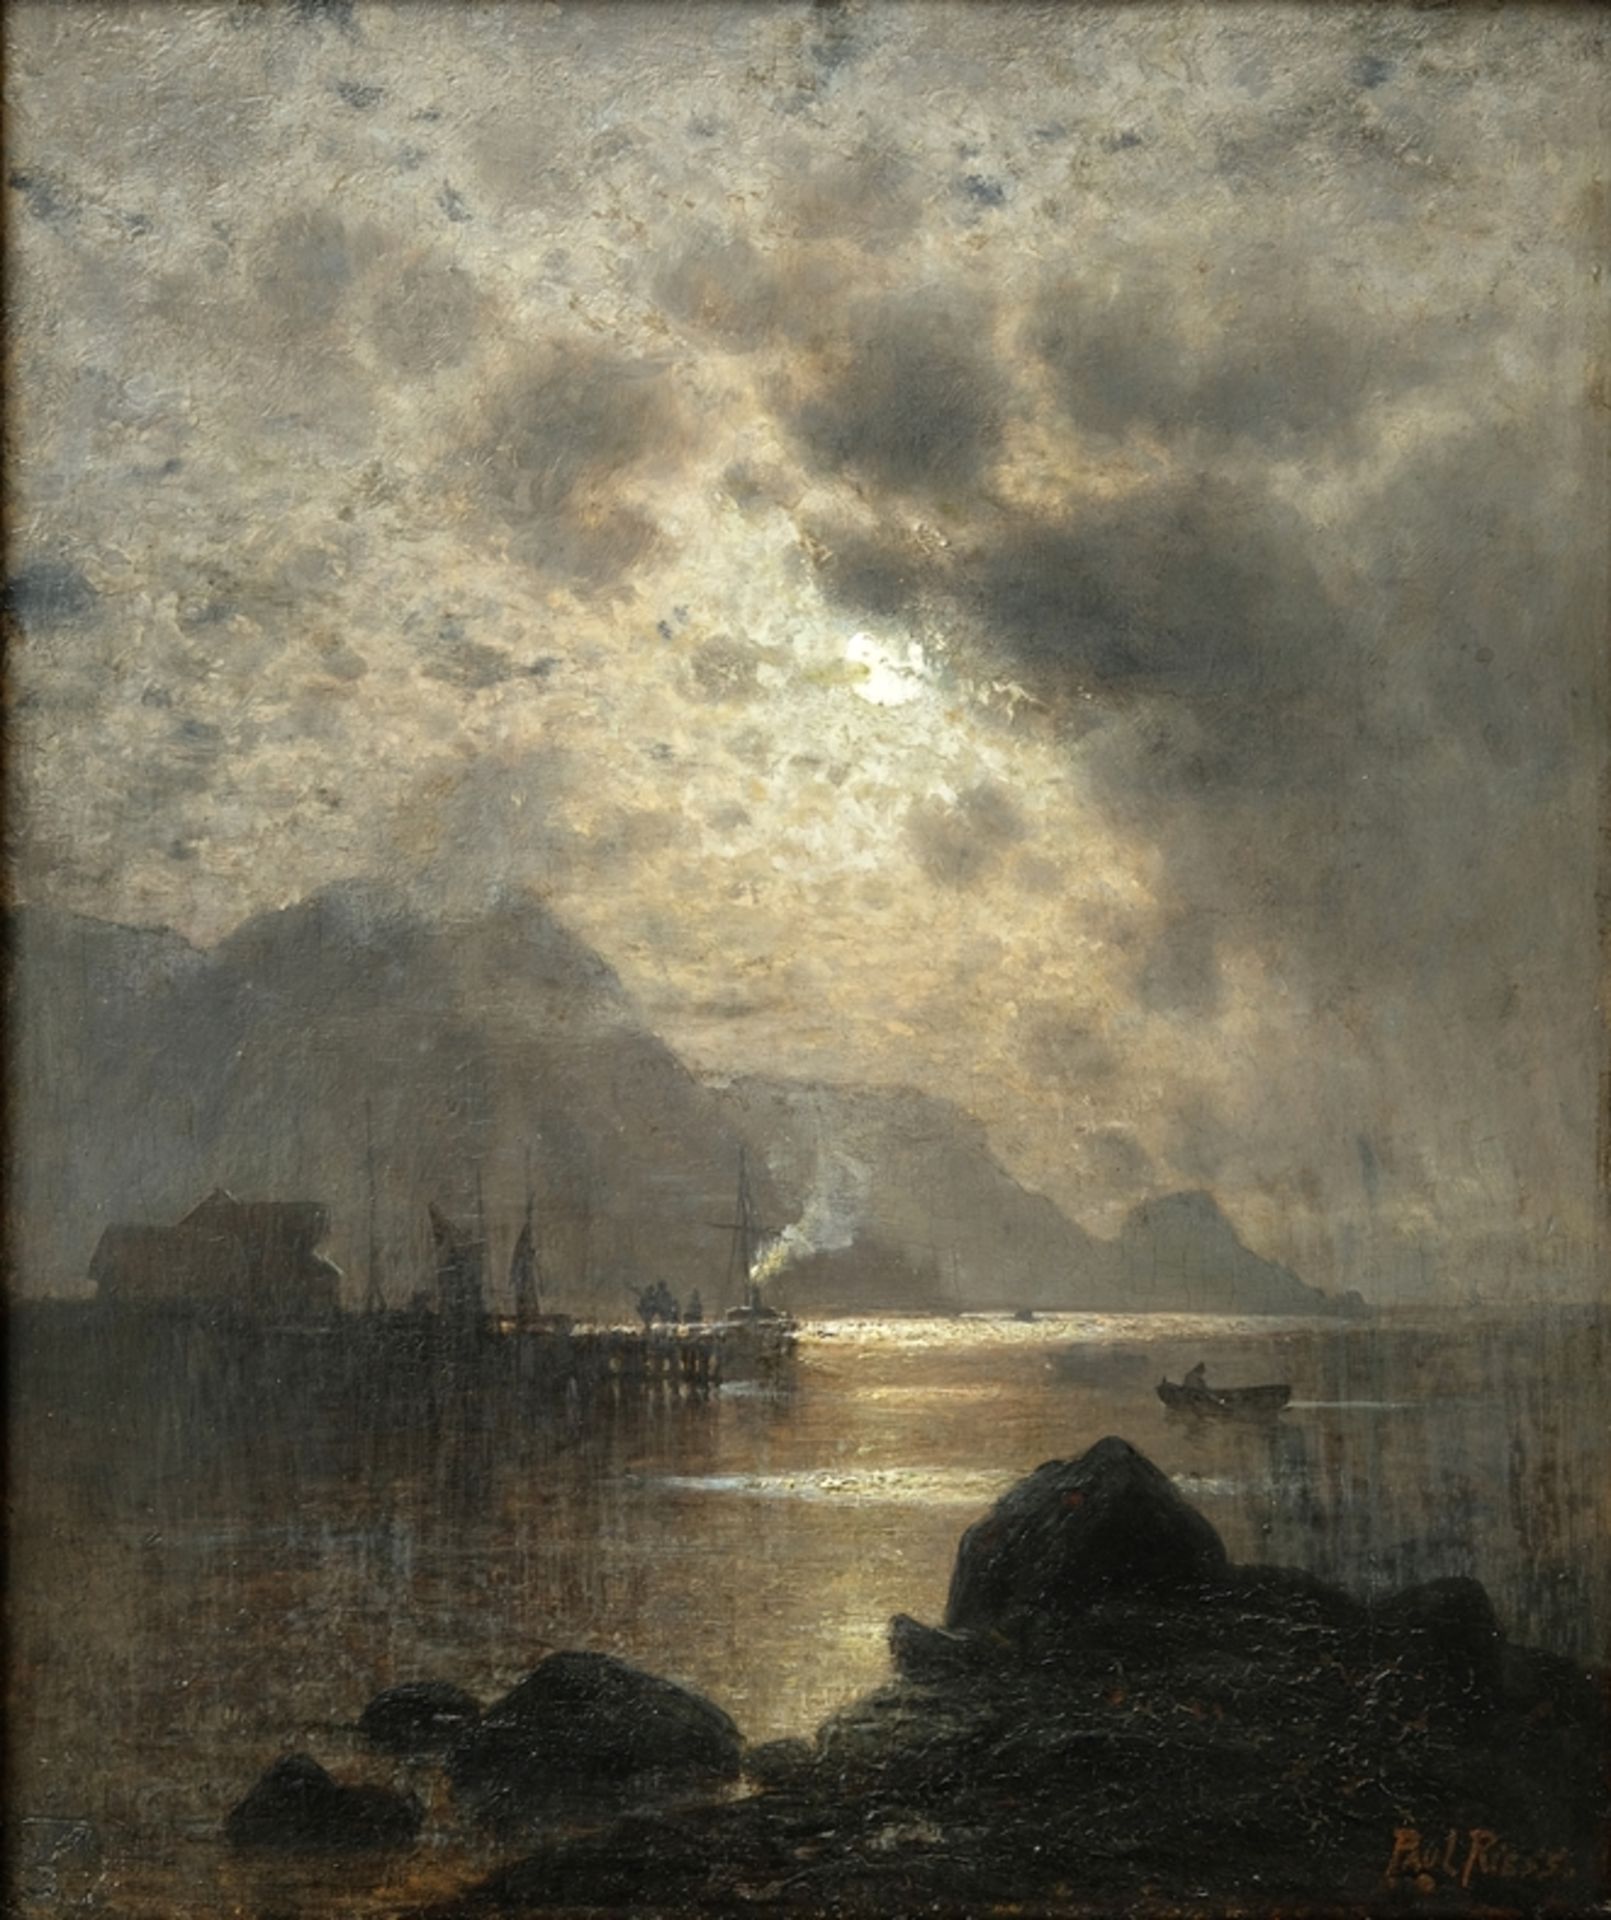 Riess, Paul (1857-1933) Norwegian coastal landscape by moonlight, around 1890, oil on wood.